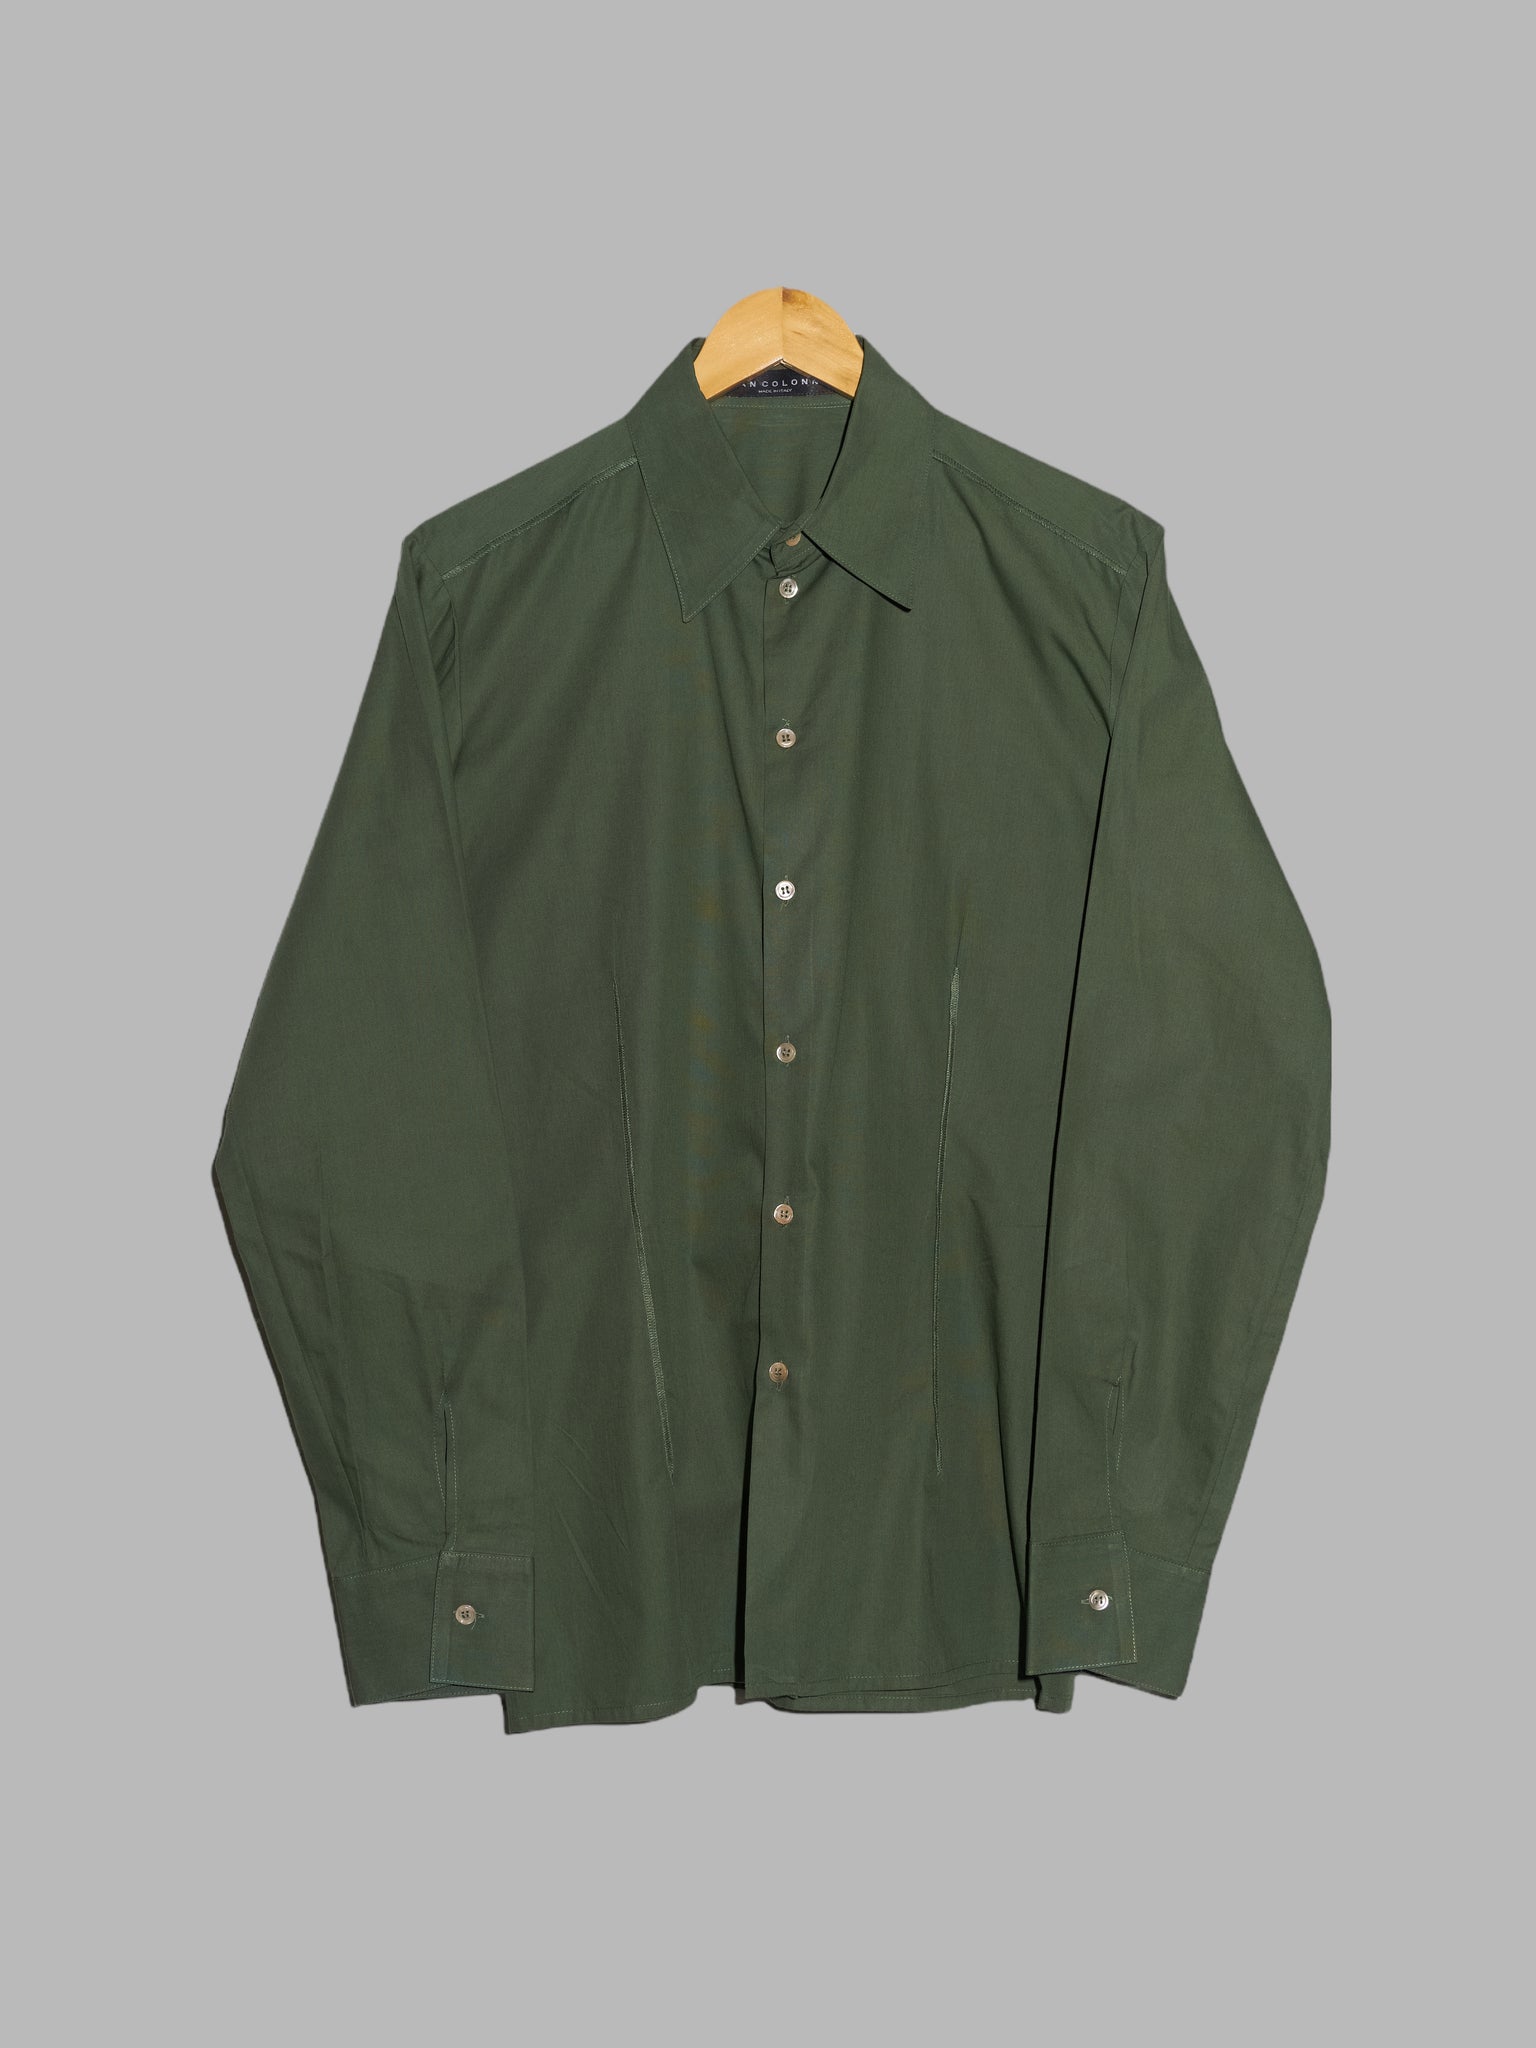 Jean Colonna khaki green cotton darted long sleeve shirt - size 48